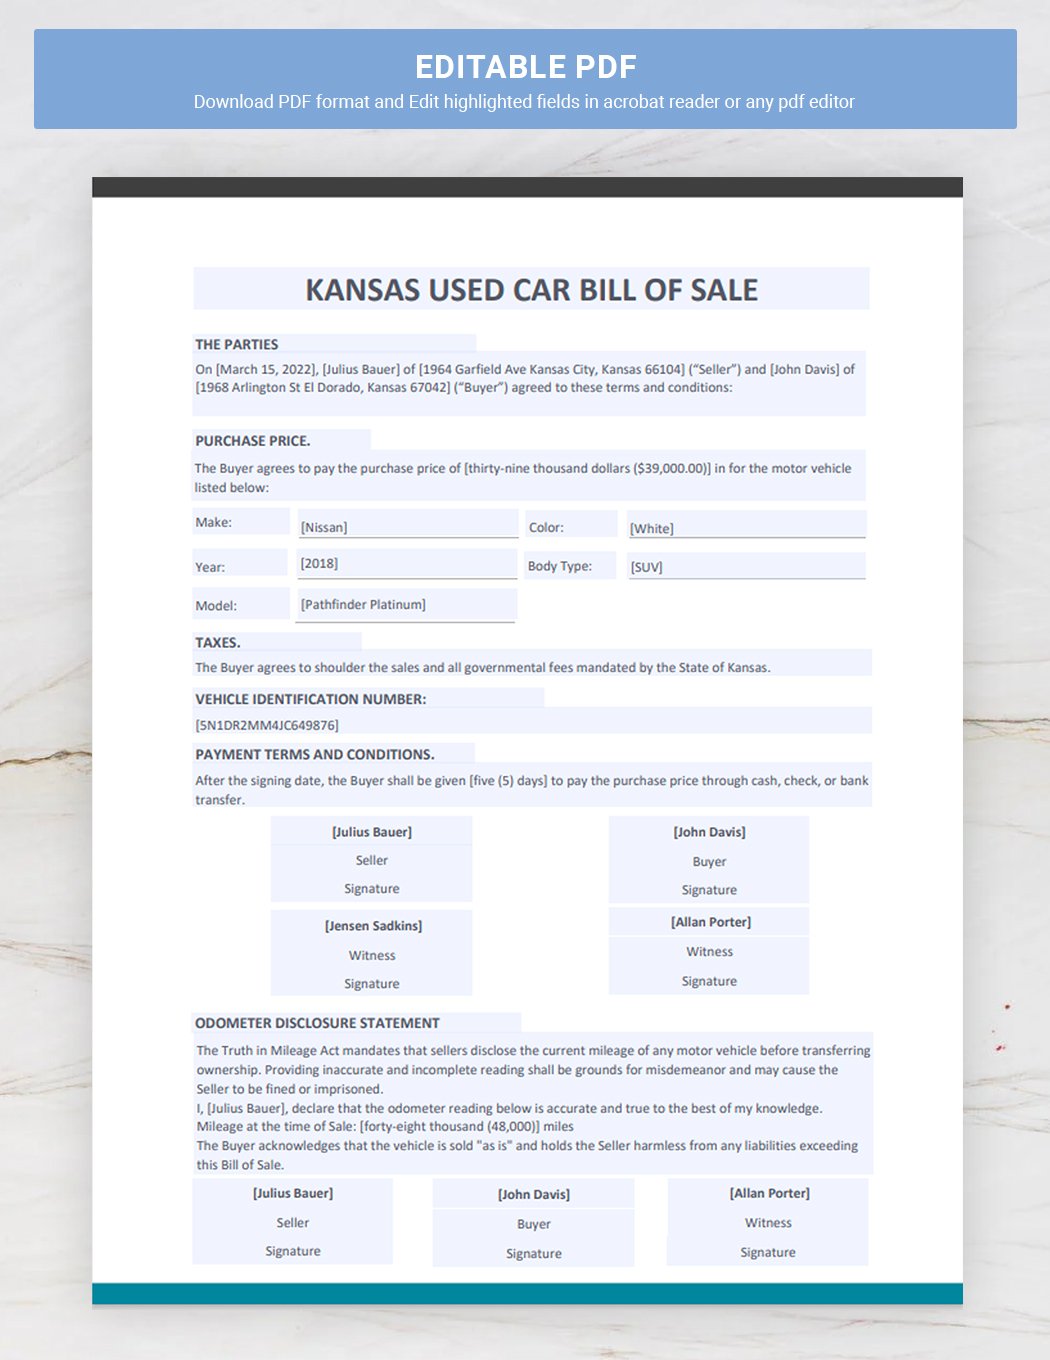 Kansas Used Car Bill of Sale Template